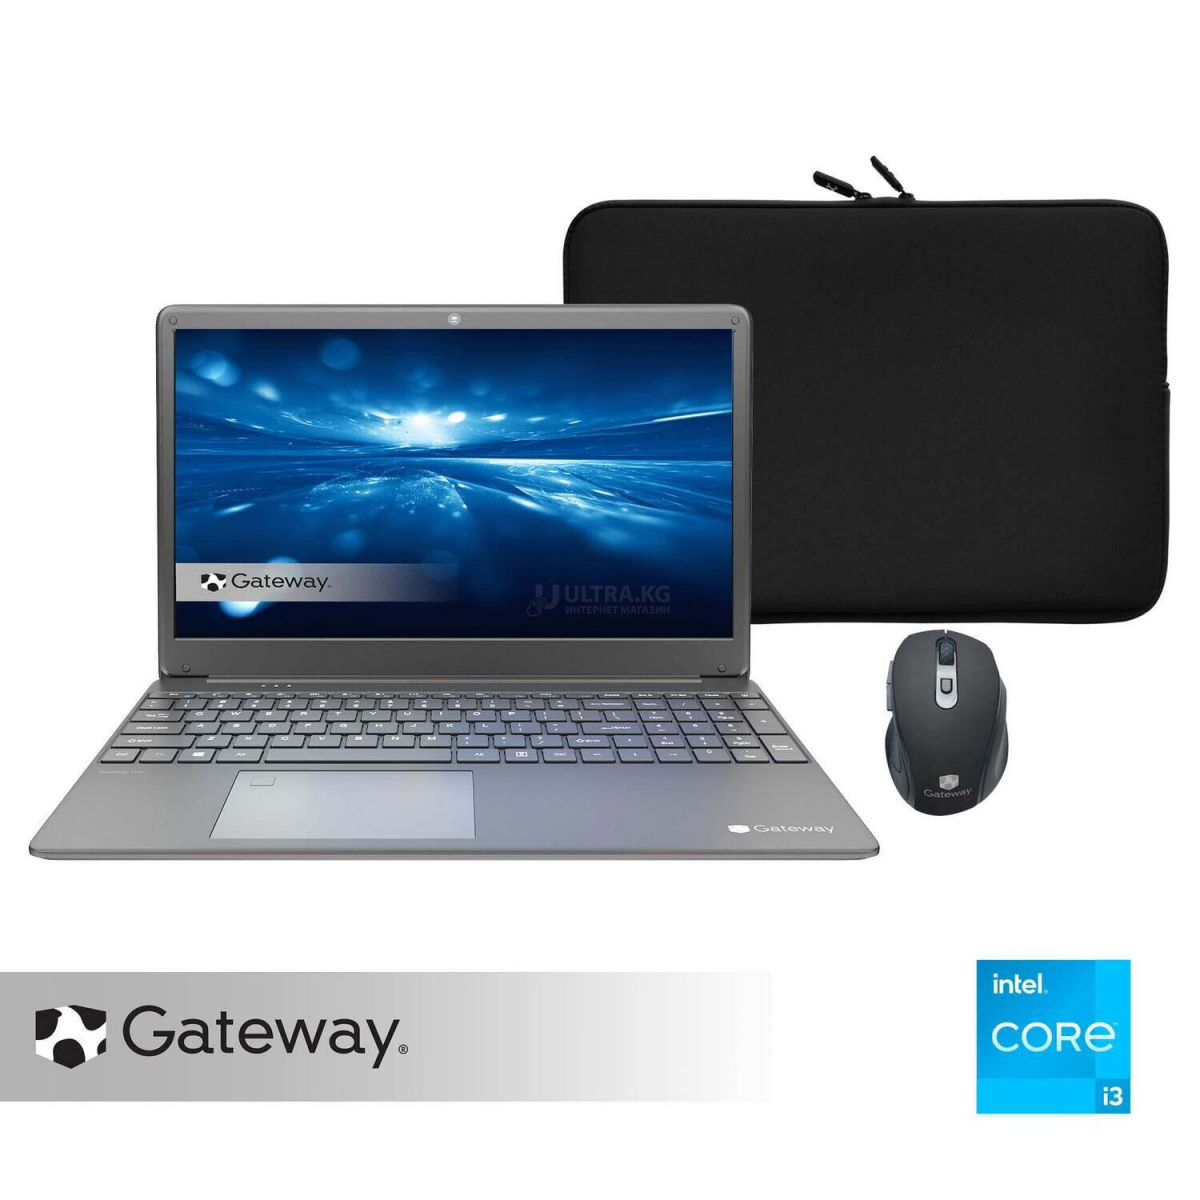 Процессор intel i3 1115g4. Ноутбук Gateway Ultra Slim i3-1115g4. Ноутбук Gateway 15 Core ¡3. Intel Core i3-1115g4. Gateway 15.6 Ultra Slim.